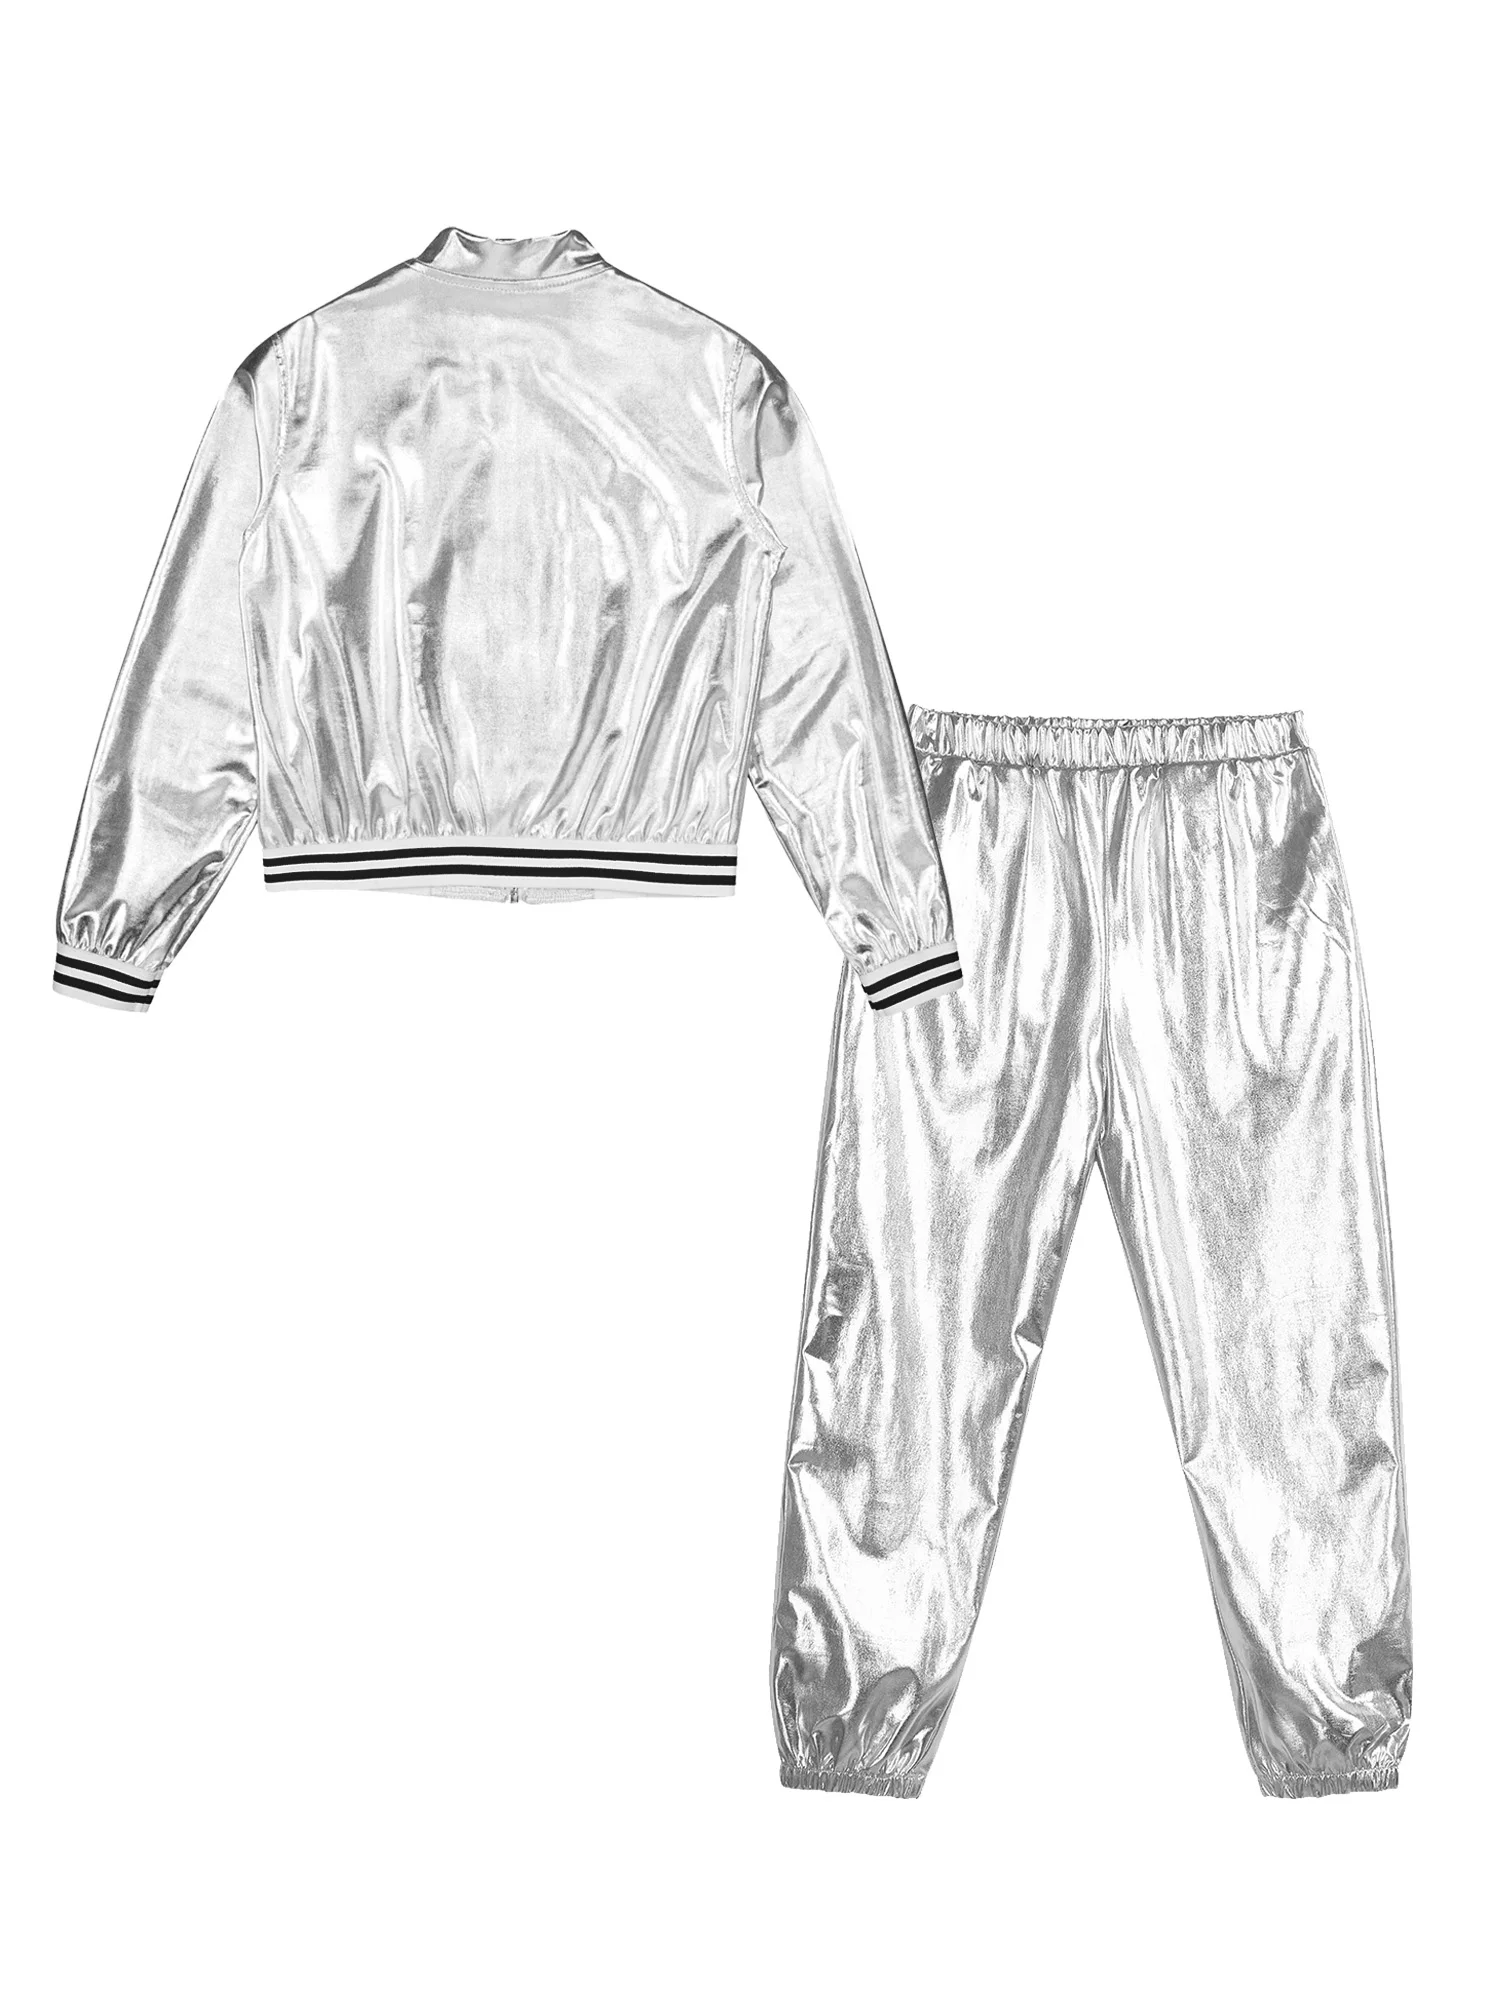 Kids Girls Jazz Hip-hop Dance Costume Sports Street Dancing Performance Outfits Shiny Metallic Jacket Bomber Coat with Pants